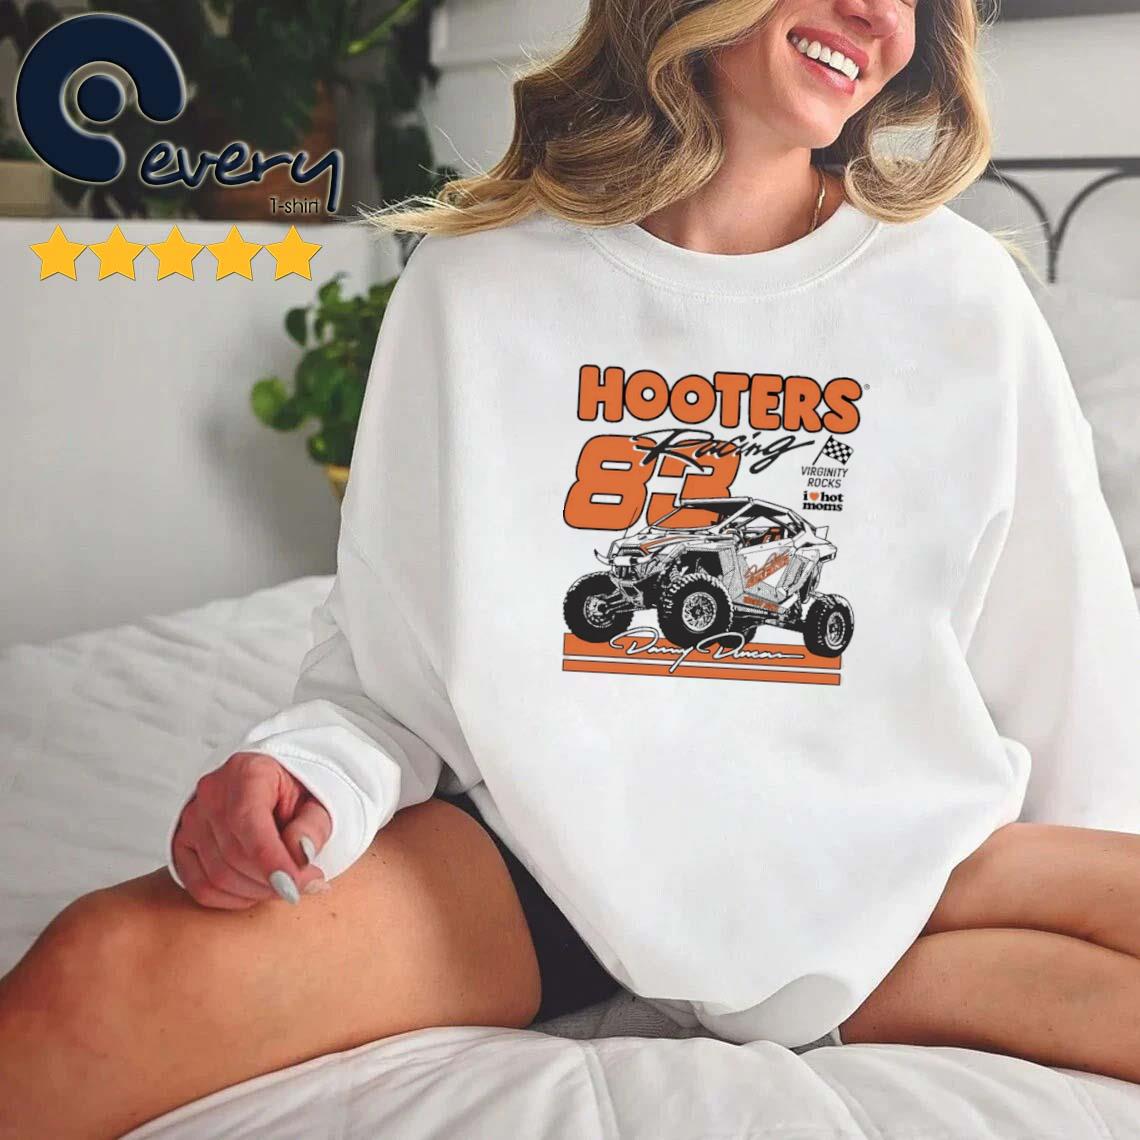 Hooters Racing 83 Danny Duncan Shirt